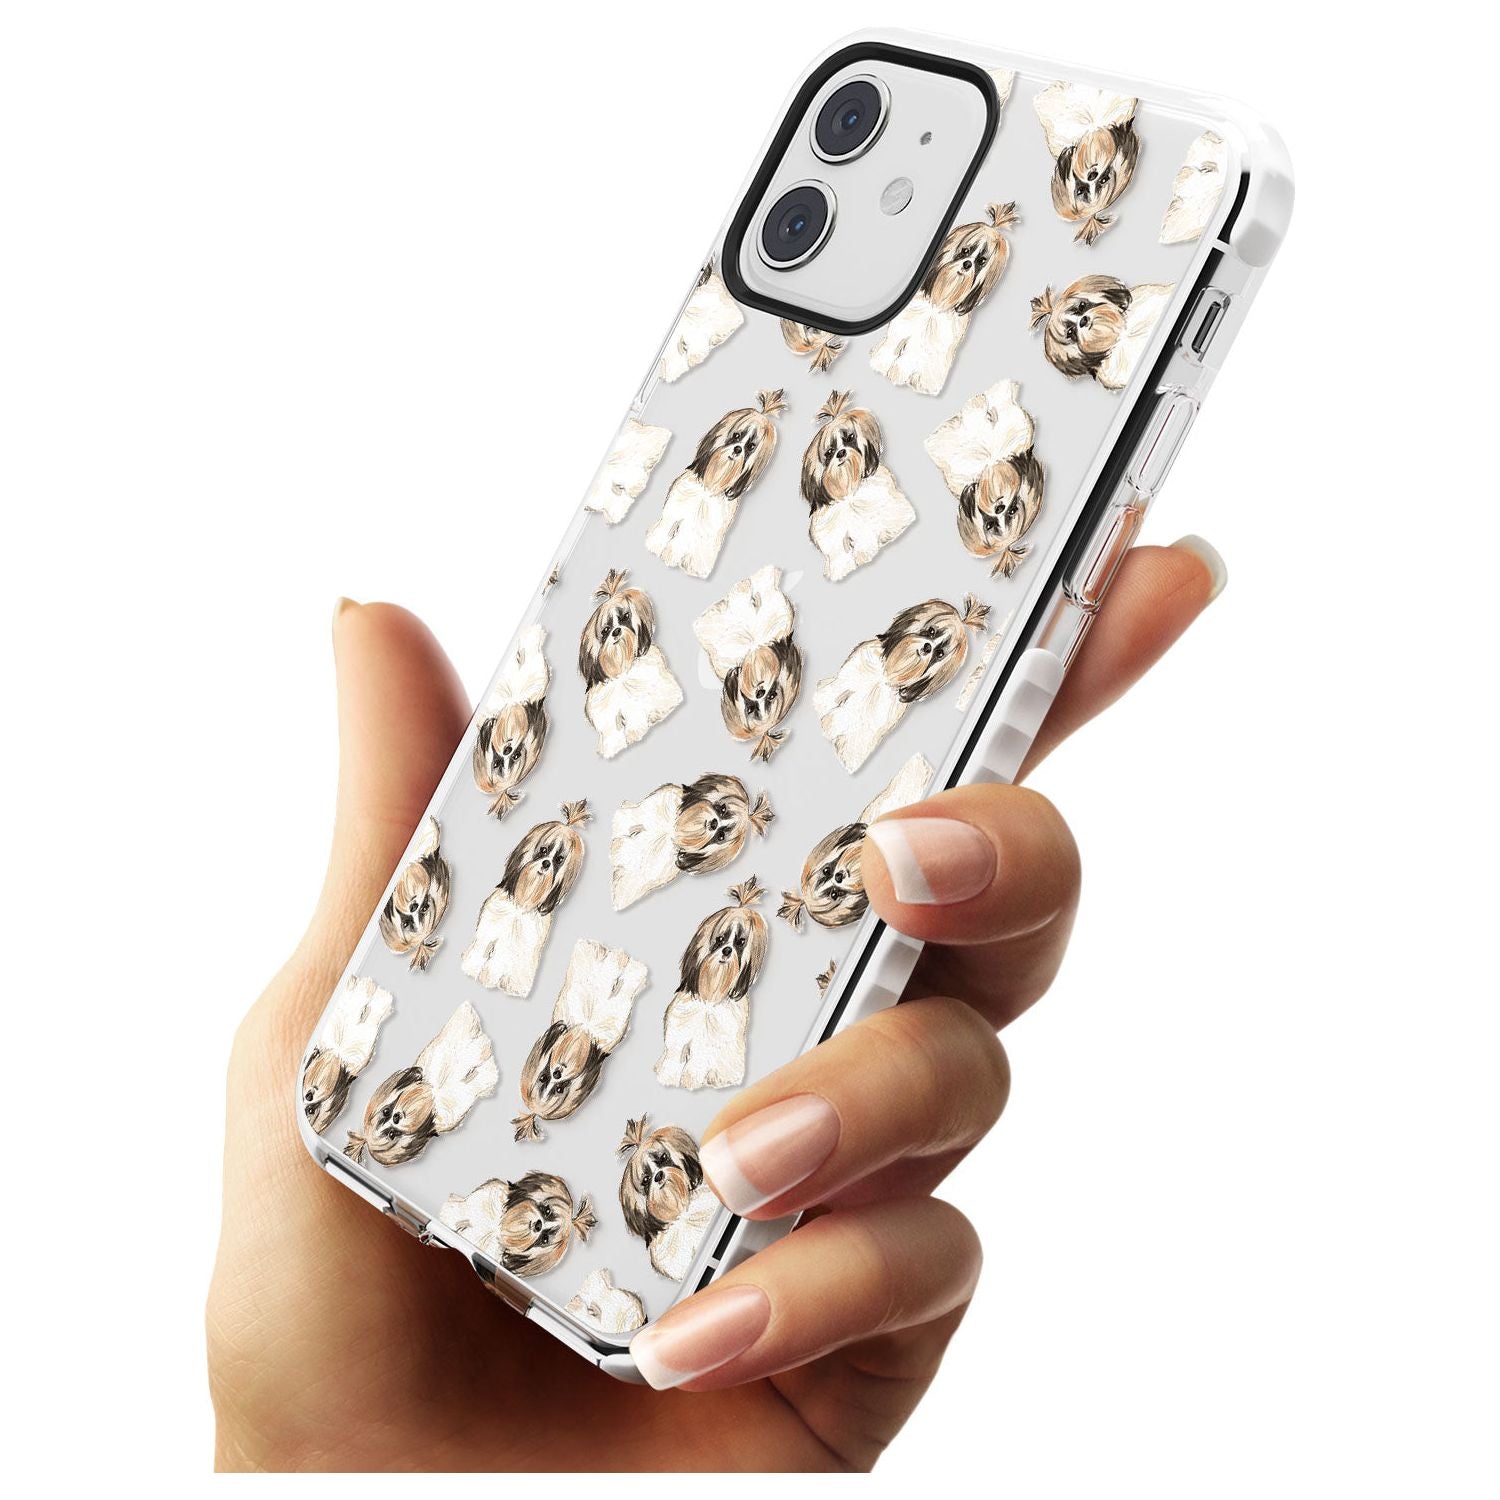 Shih tzu (Long Hair) Watercolour Dog Pattern Impact Phone Case for iPhone 11